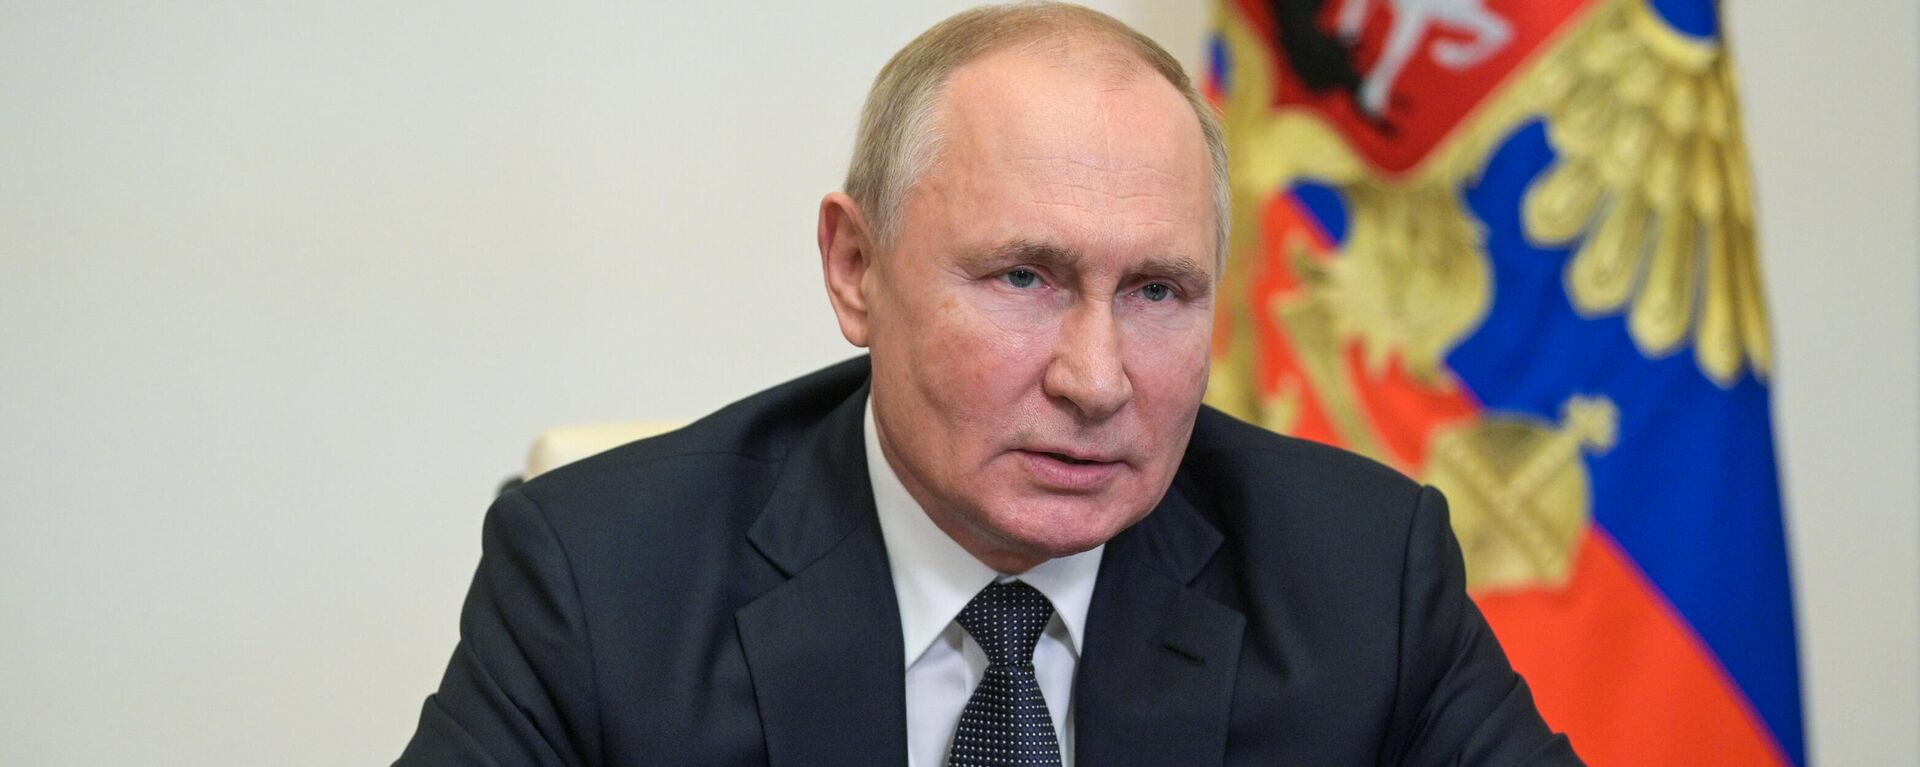 Vladímir Putin,  presidente de Rusia  - Sputnik Mundo, 1920, 09.12.2021